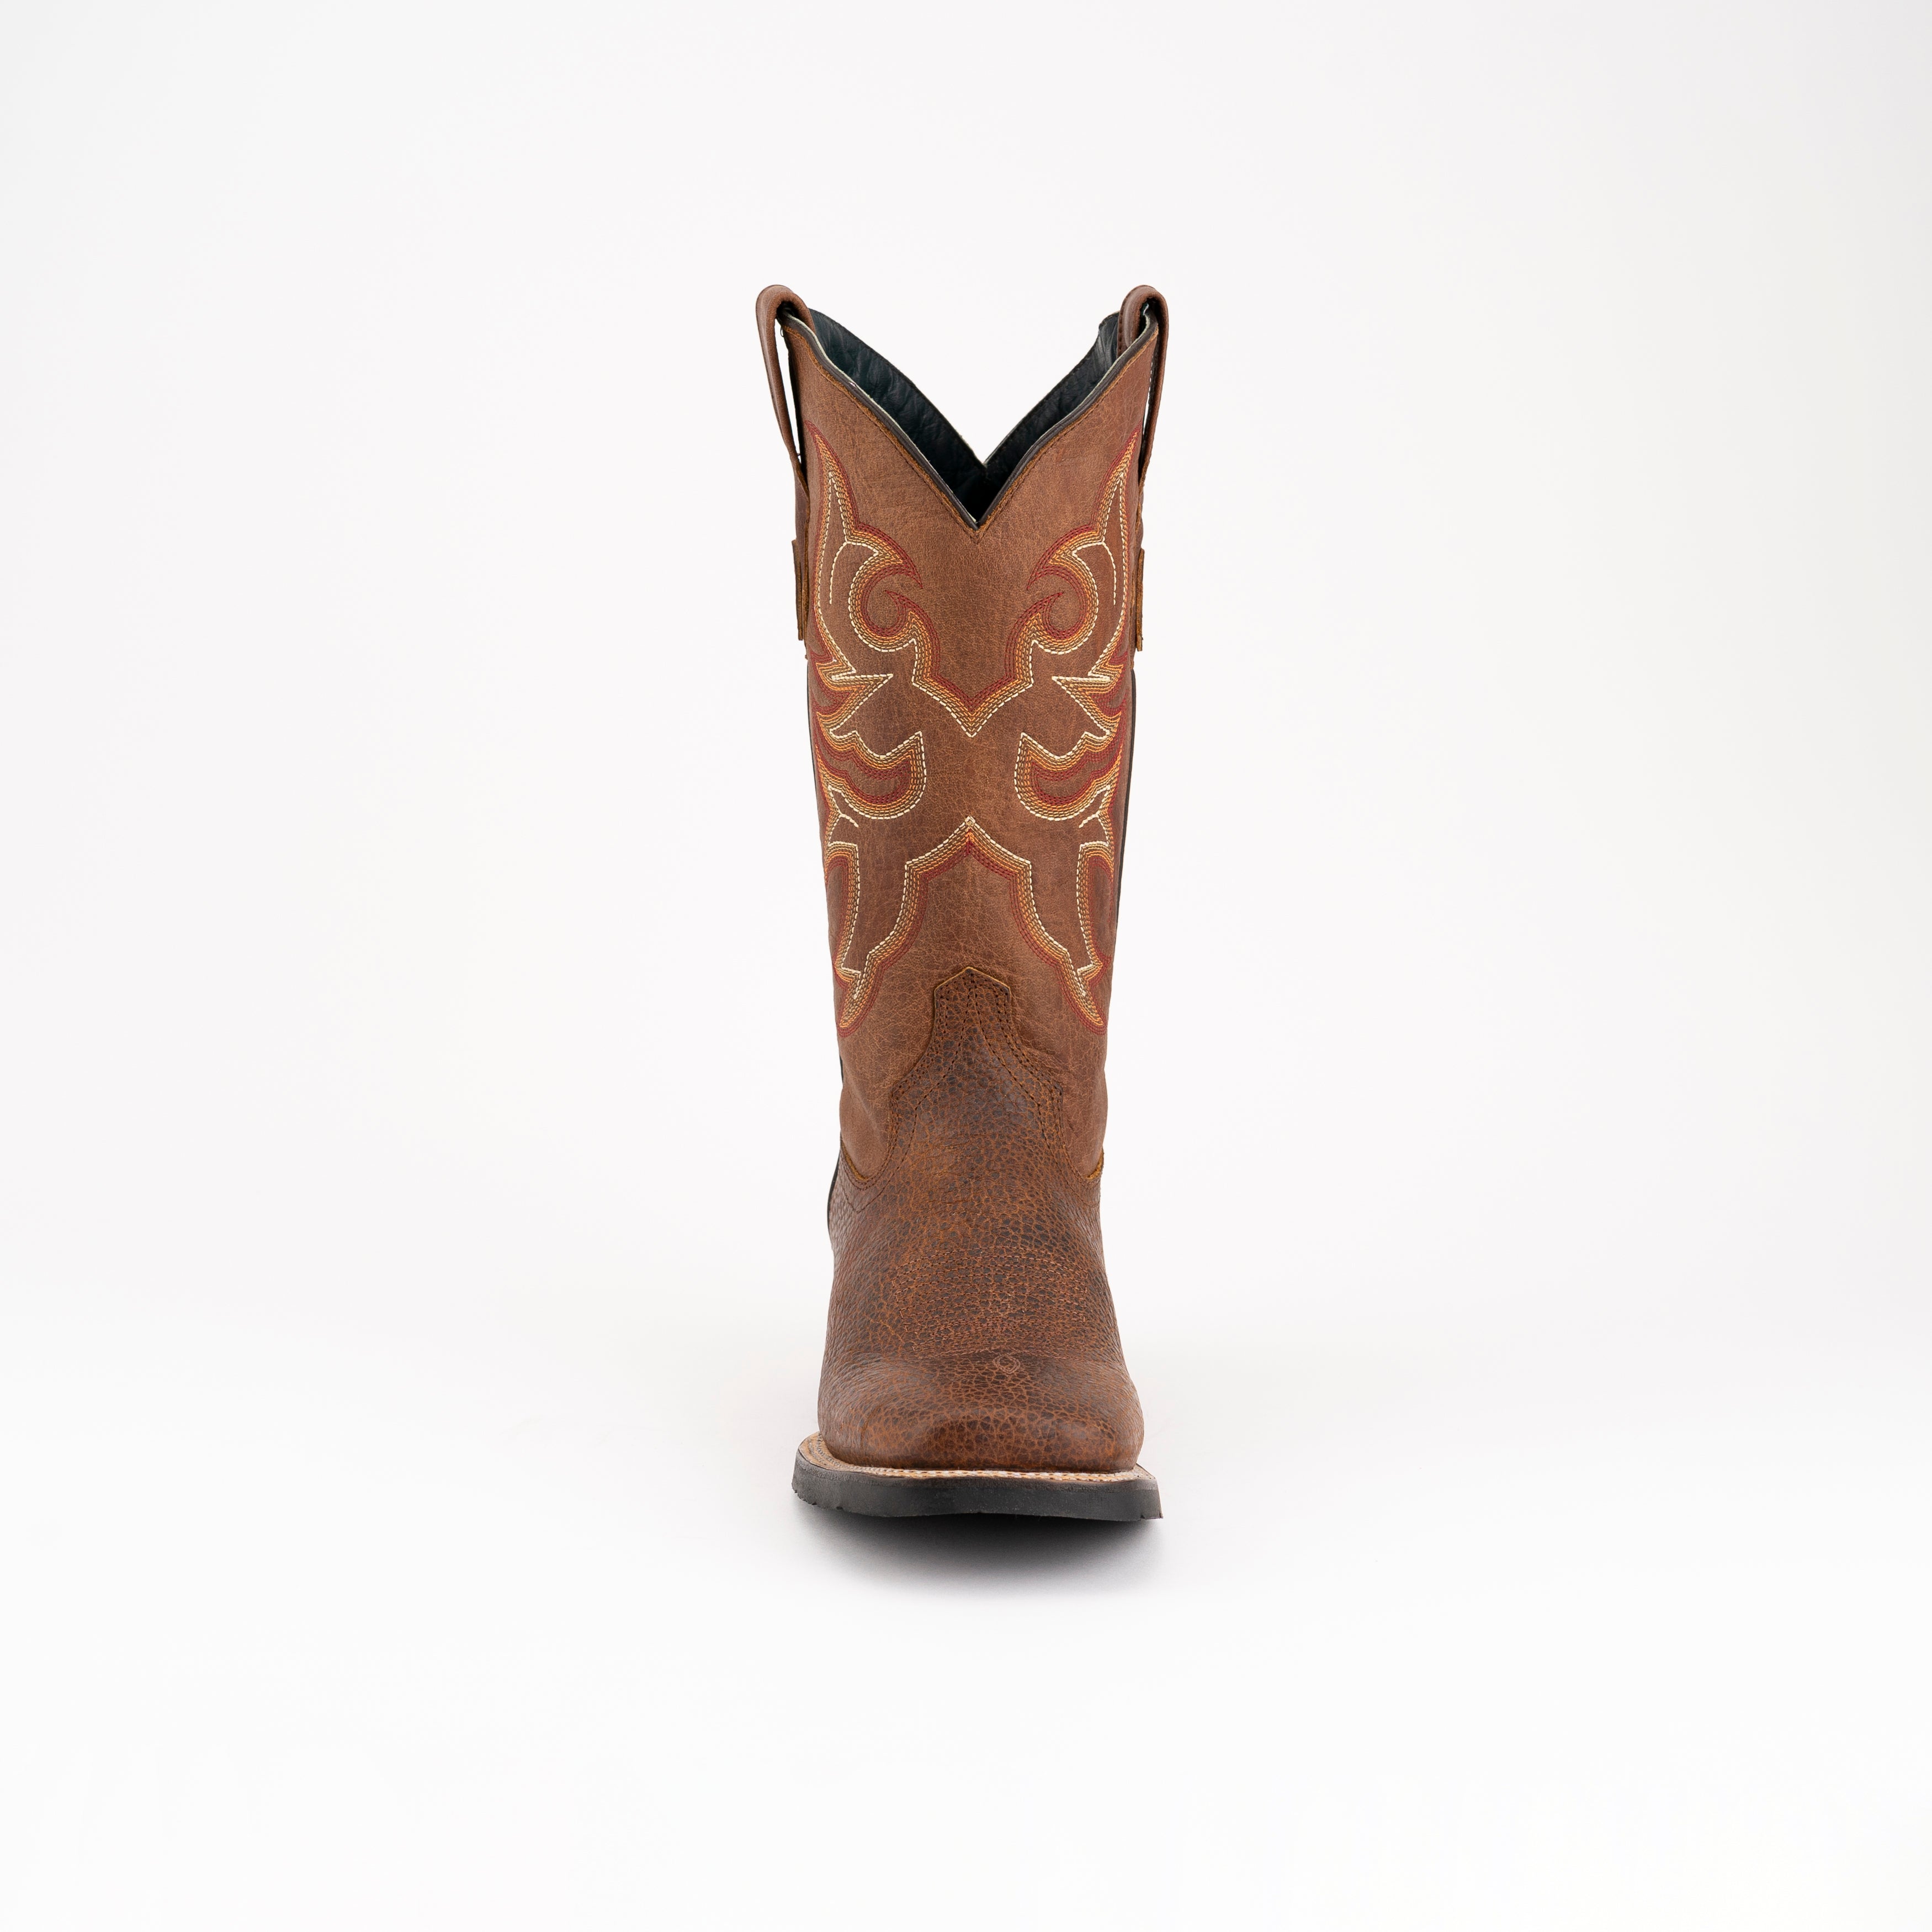 Ferrini USA Toro Ladies' Boots